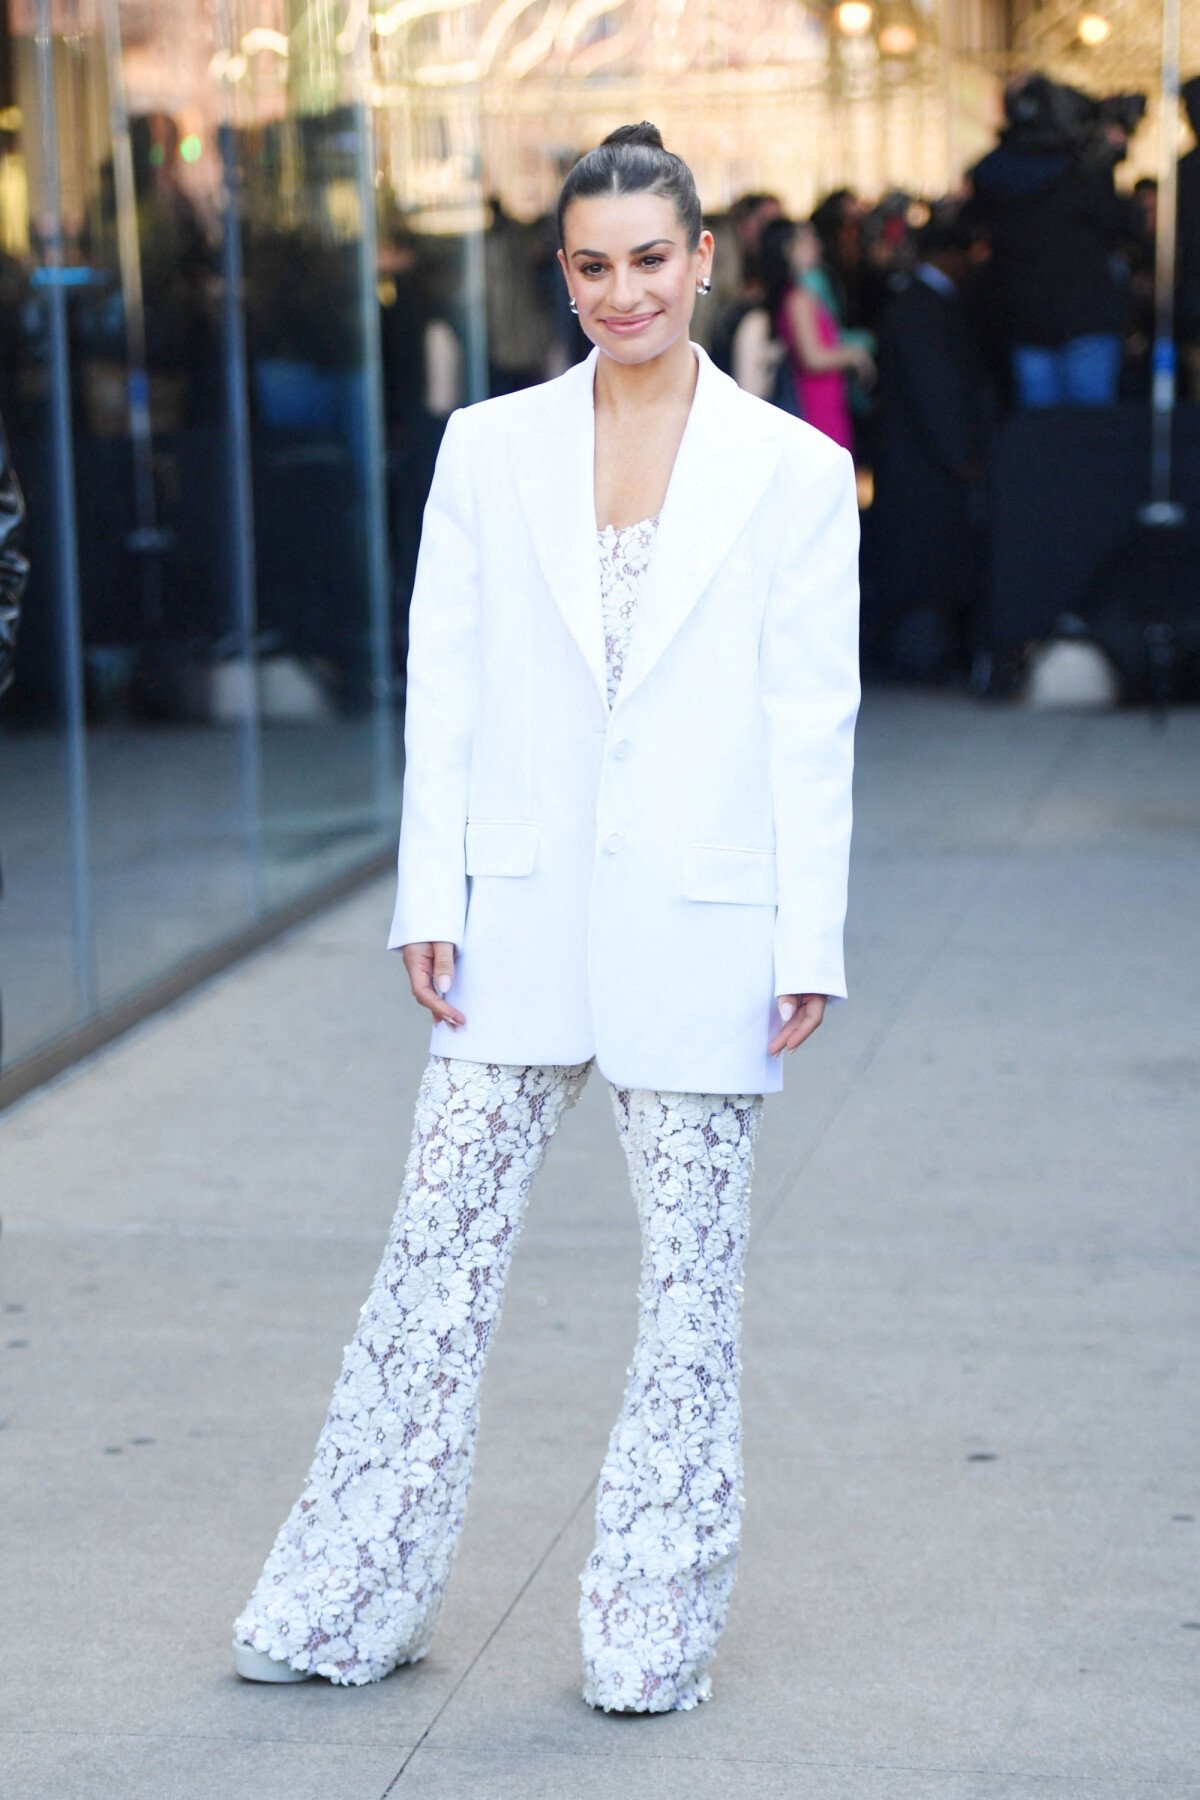 Photo Lea Michele arrive au défilé de mode prêtàporter automne